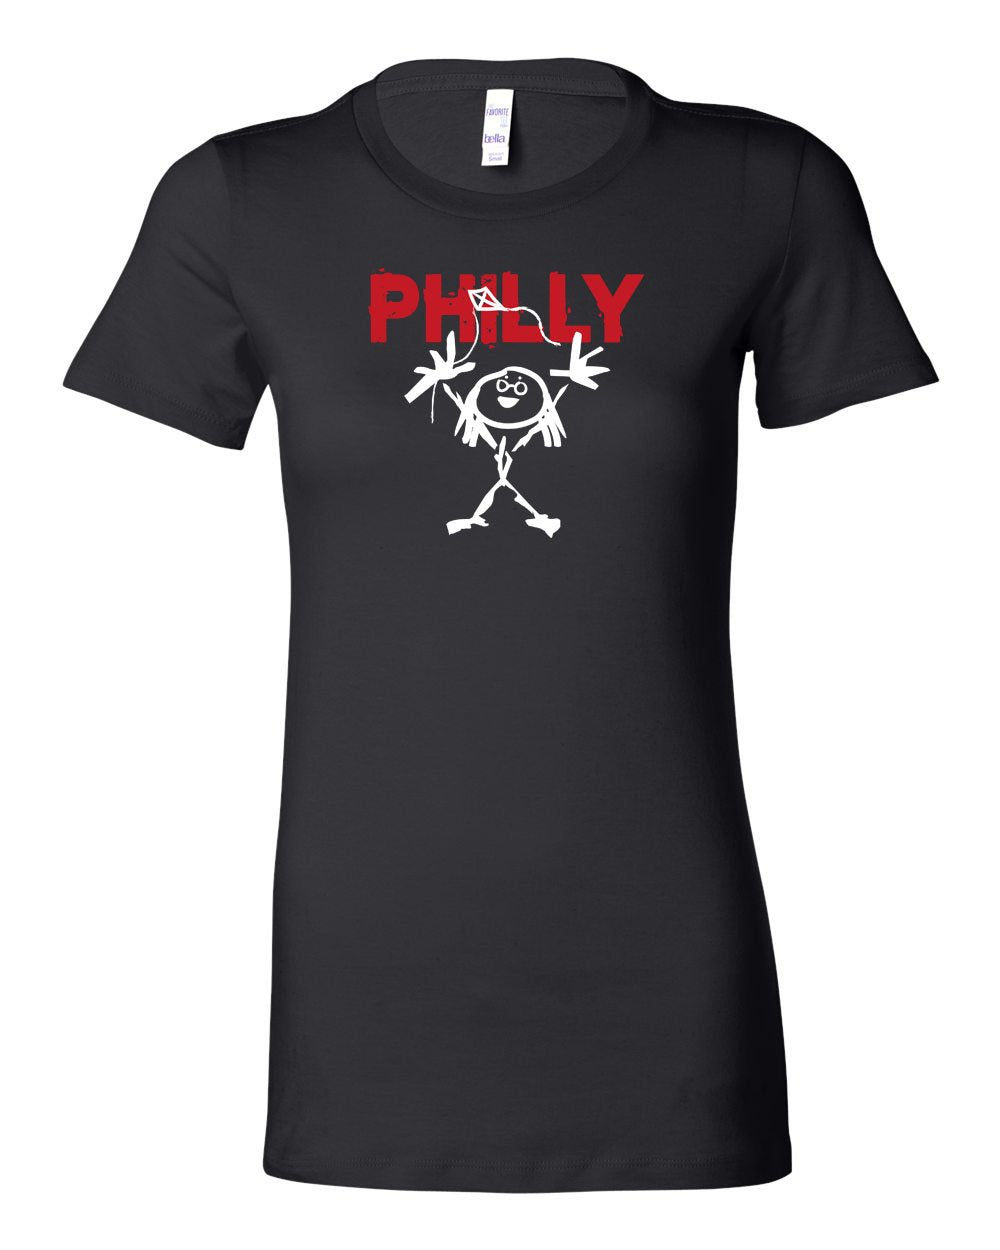 Philly PJ LADIES Junior-Fit T-Shirt